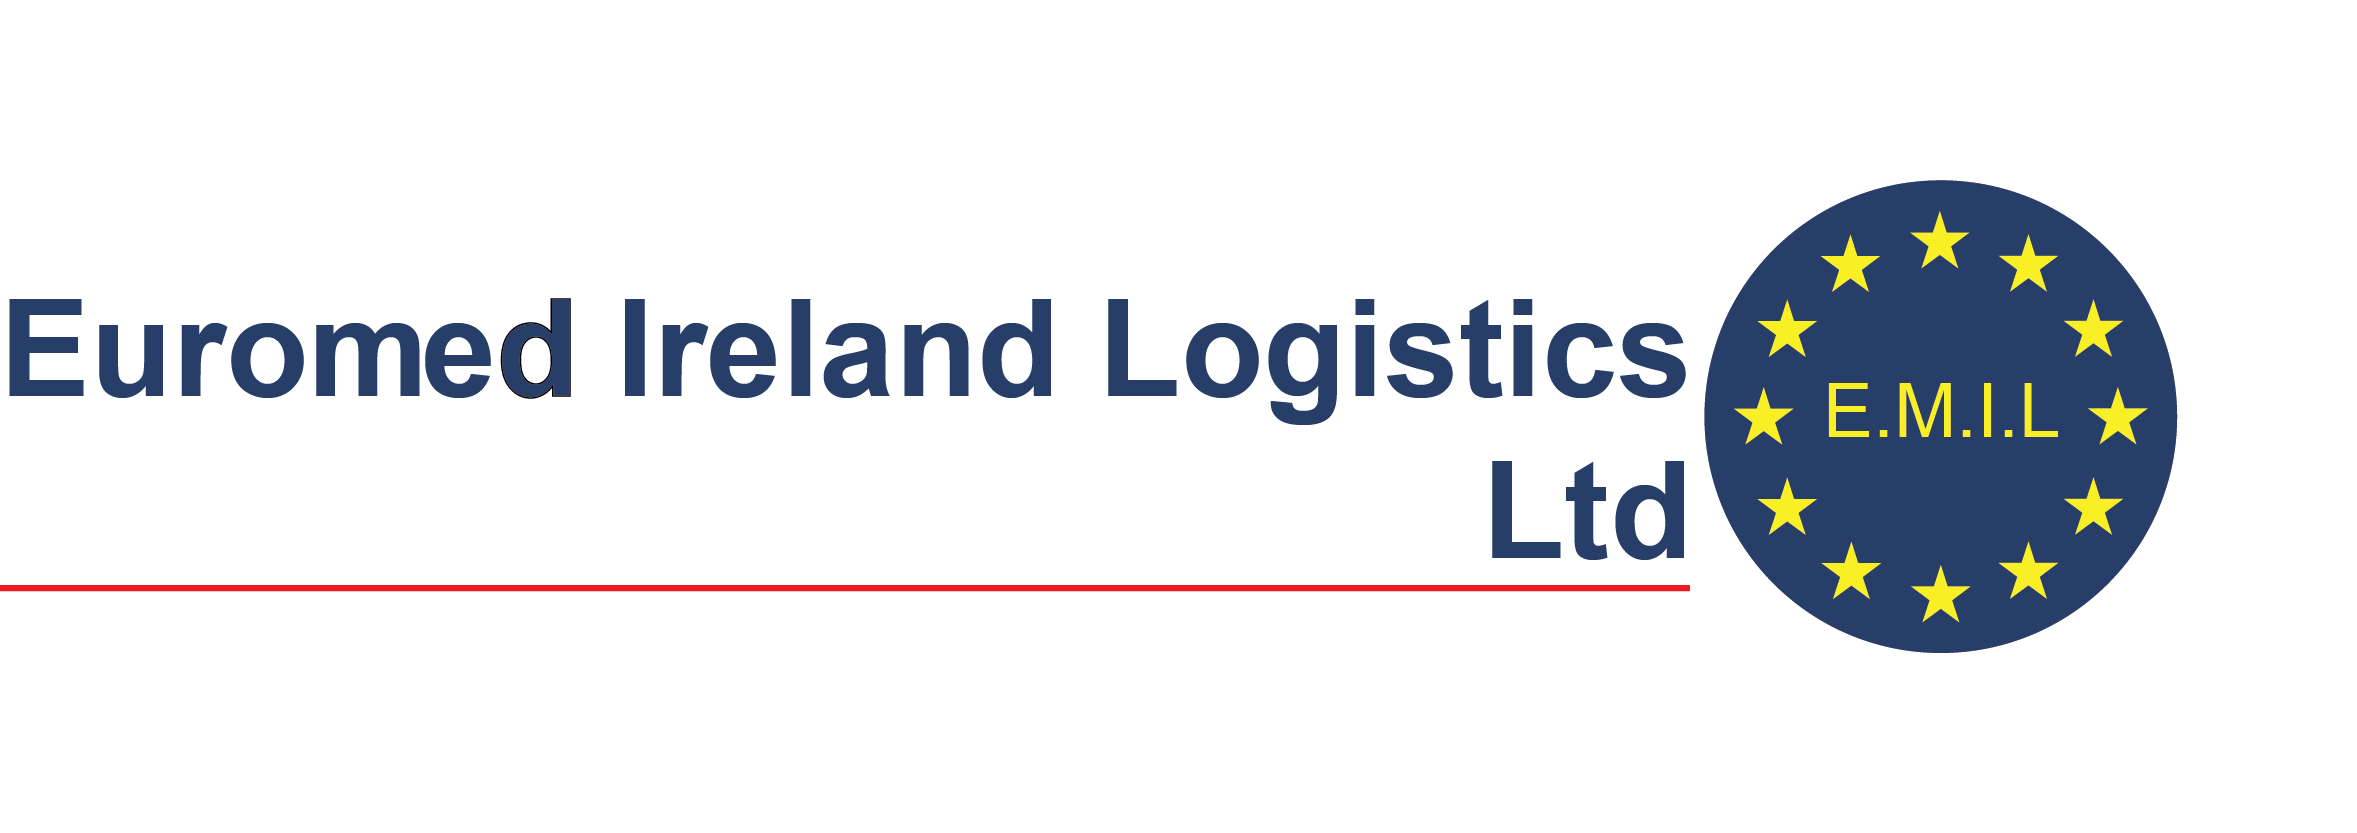 Euromed Ireland Logistics Ltd